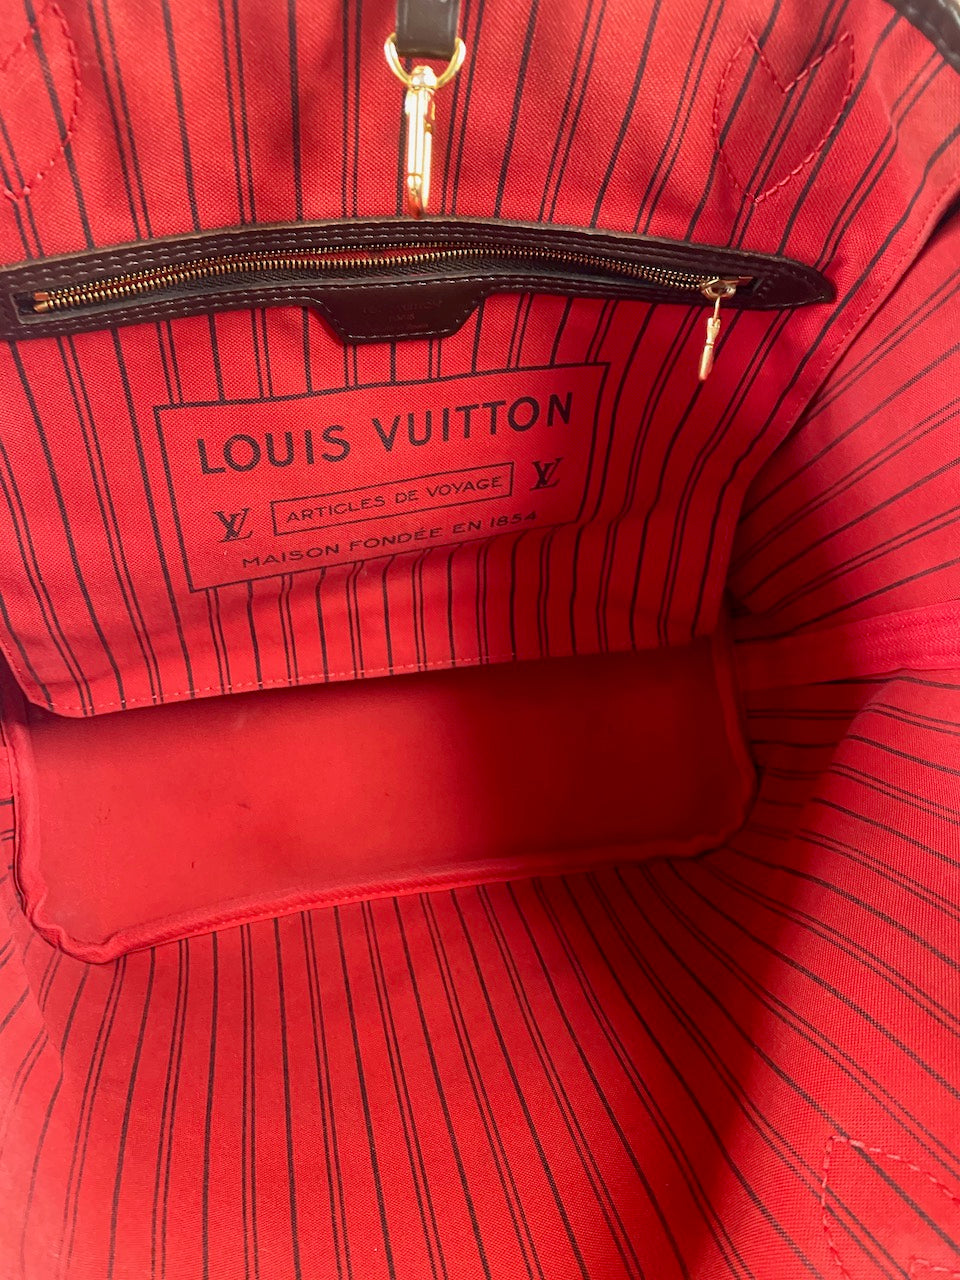 Louis Vuitton Damier Ebene “Neverfull” MM - As Seen On Instagram 06/09/20 - Siopaella Designer Exchange